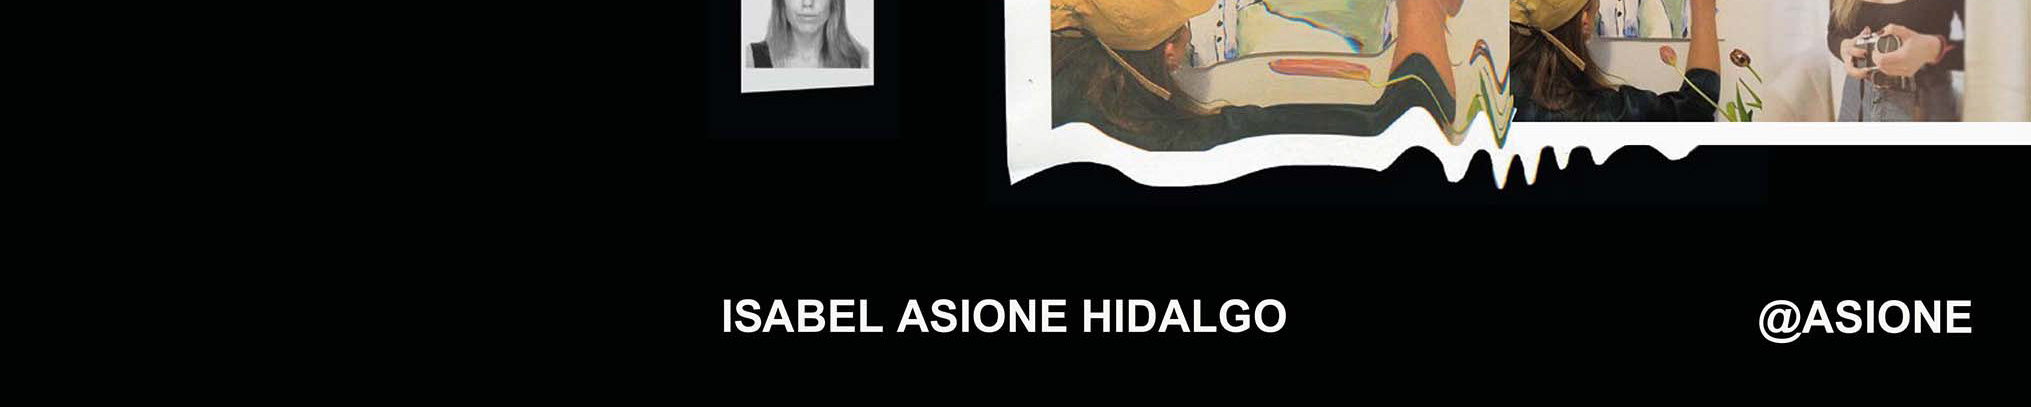 Banner de perfil de Isabel asione Hidalgo